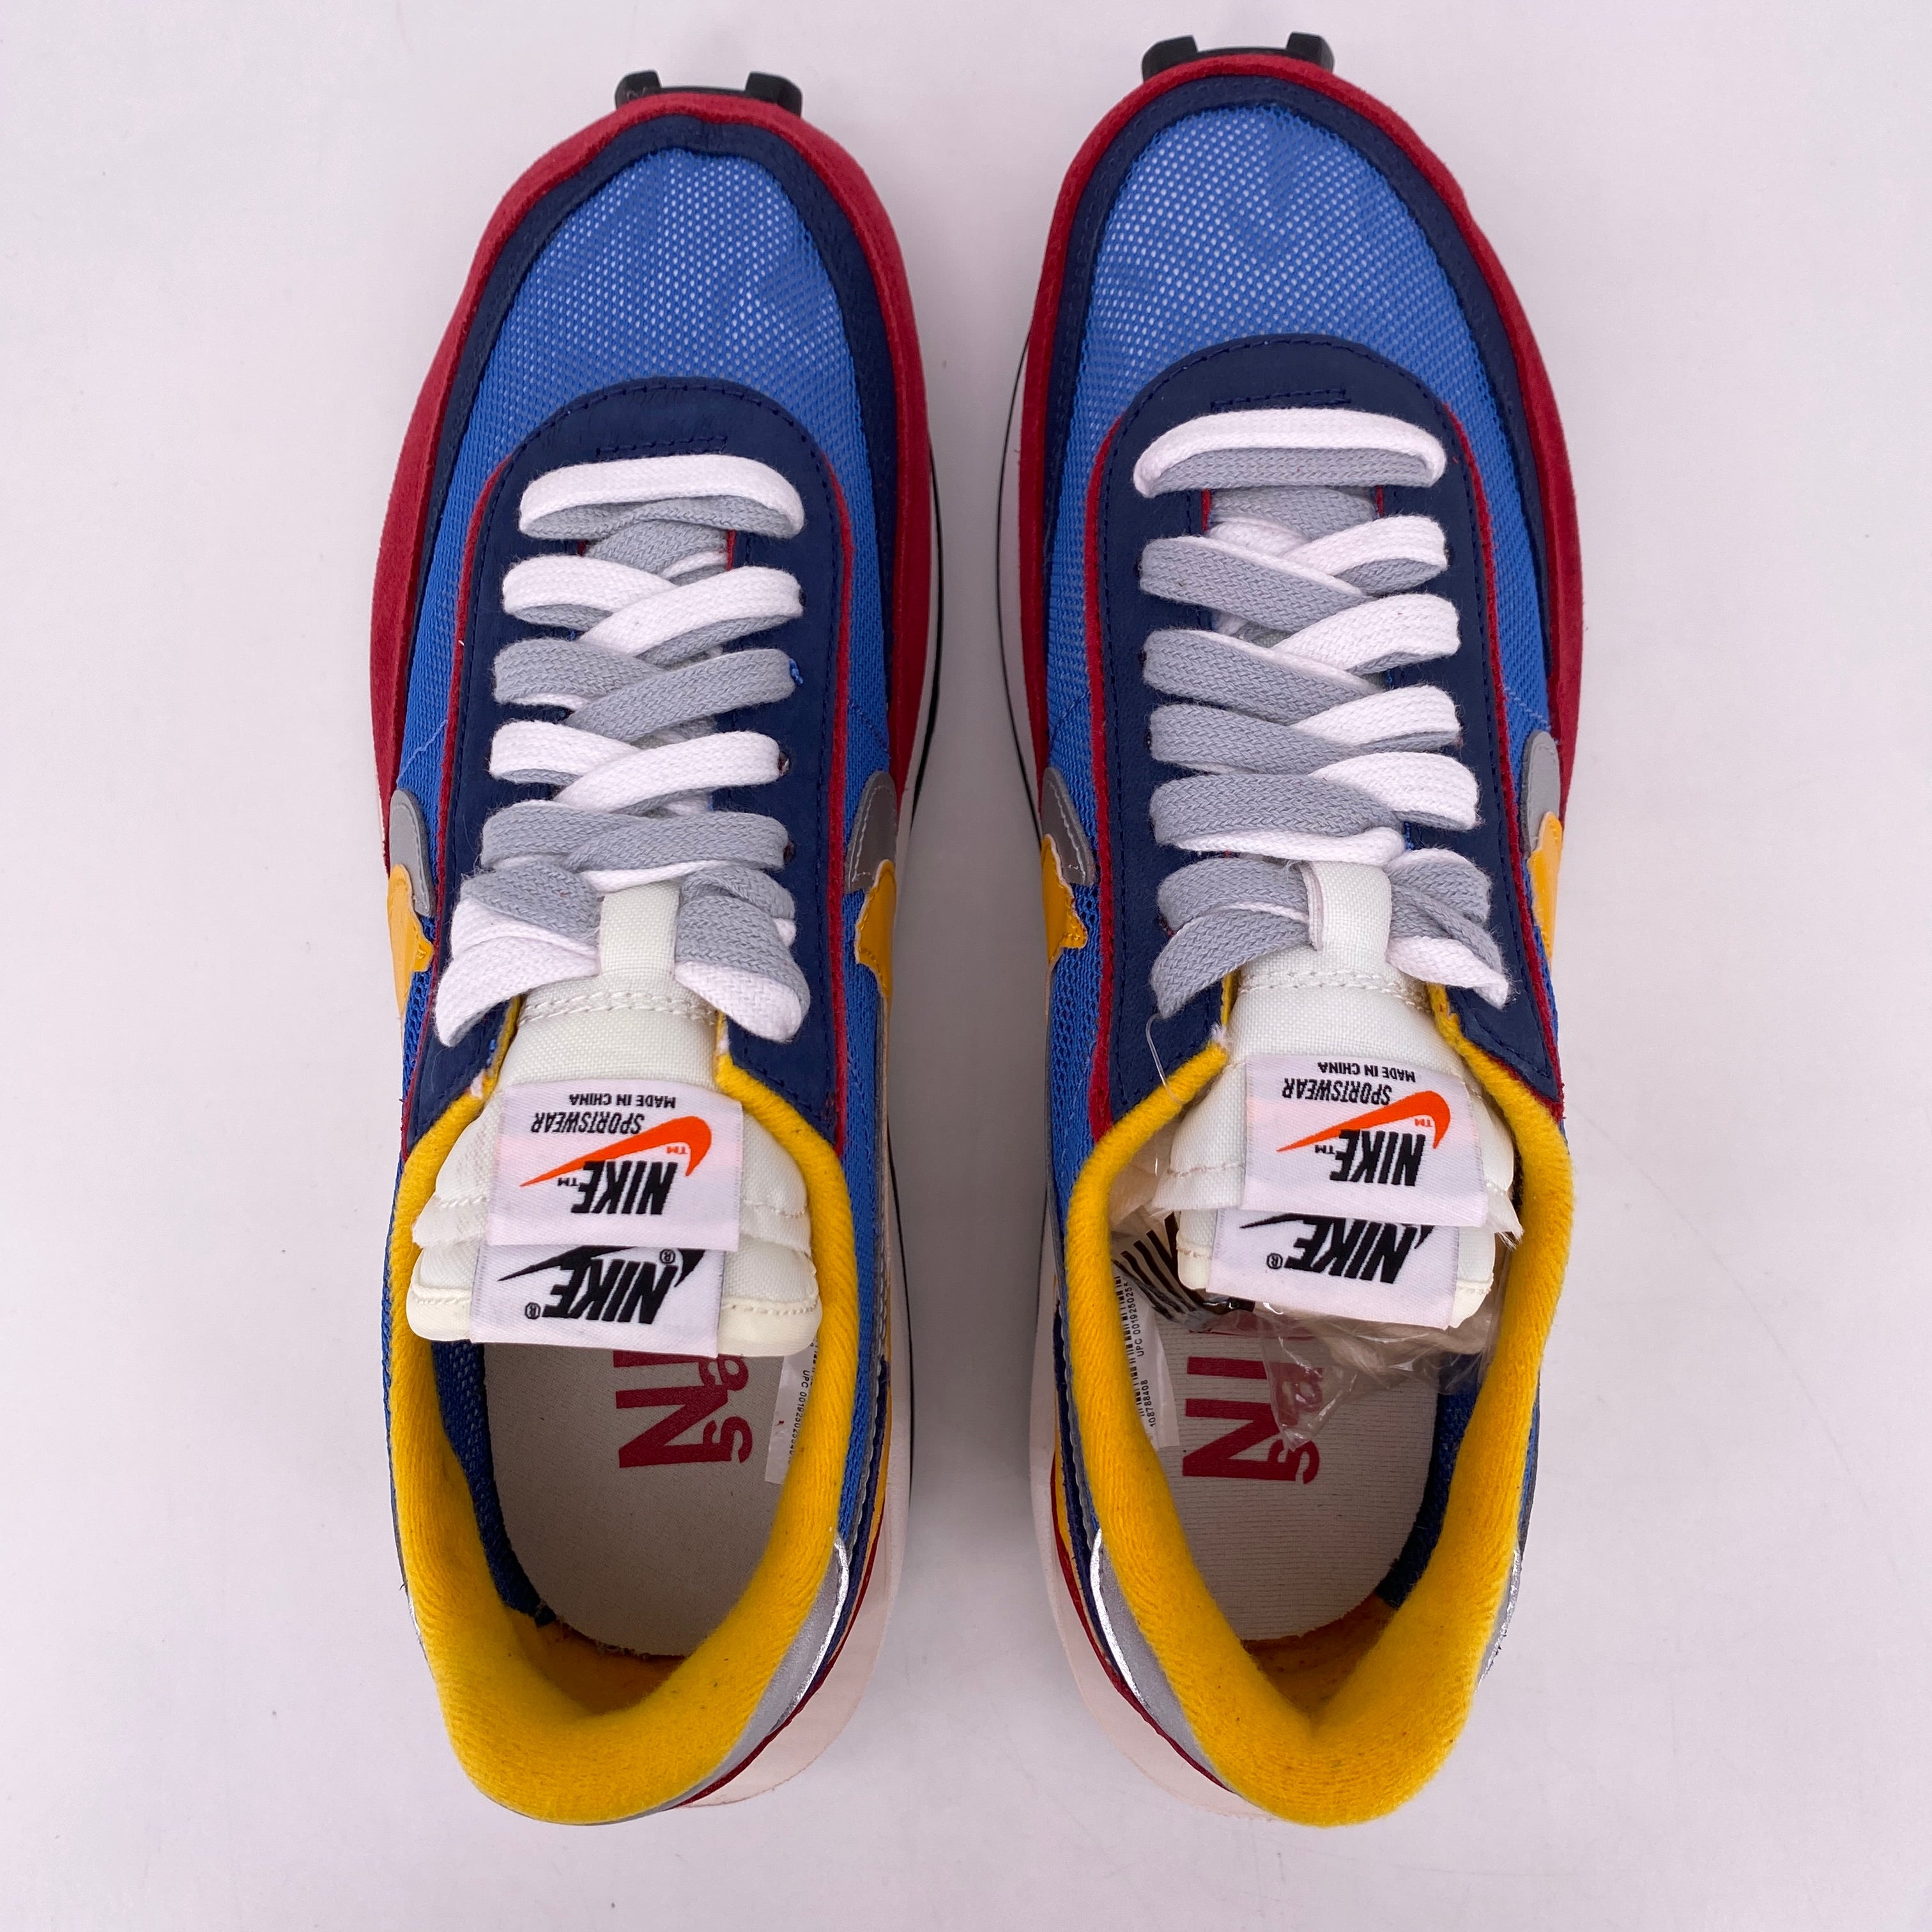 Nike LD WAFFLE / Sacai "Blue Multi" 2019 New Size 8